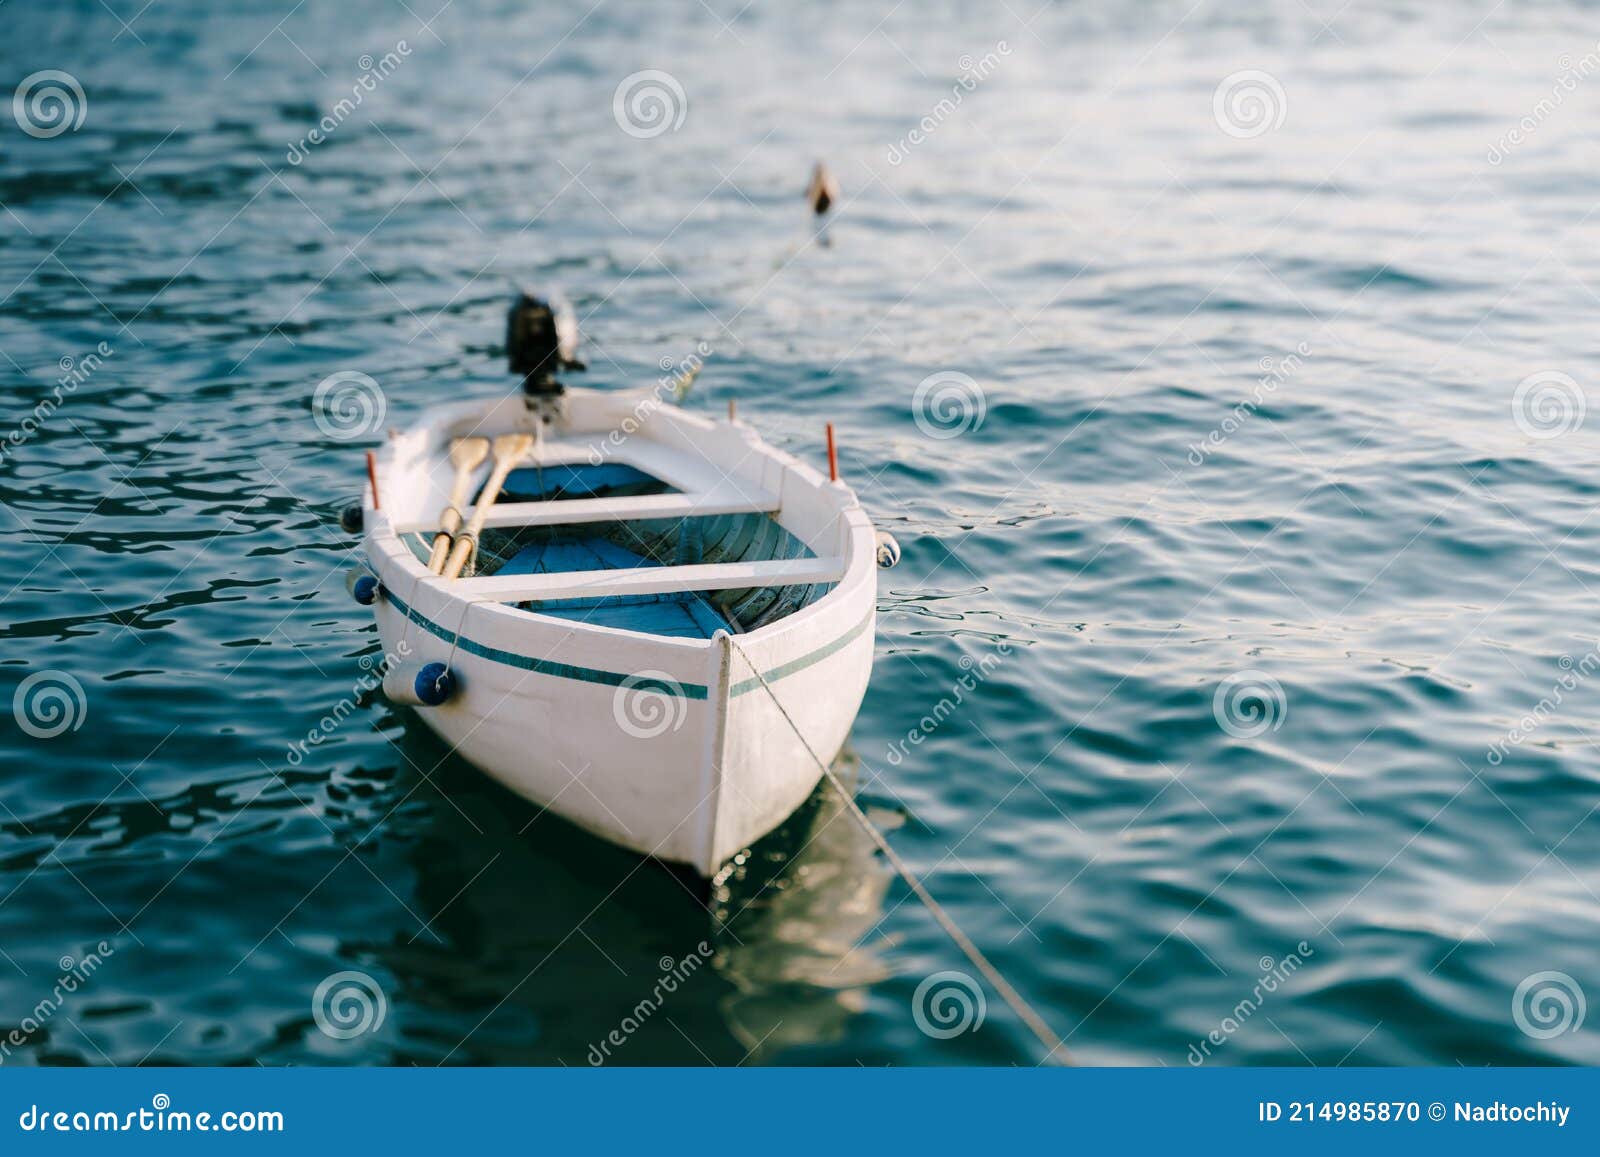 https://thumbs.dreamstime.com/z/white-wooden-fishing-boat-oars-motor-high-quality-photo-214985870.jpg